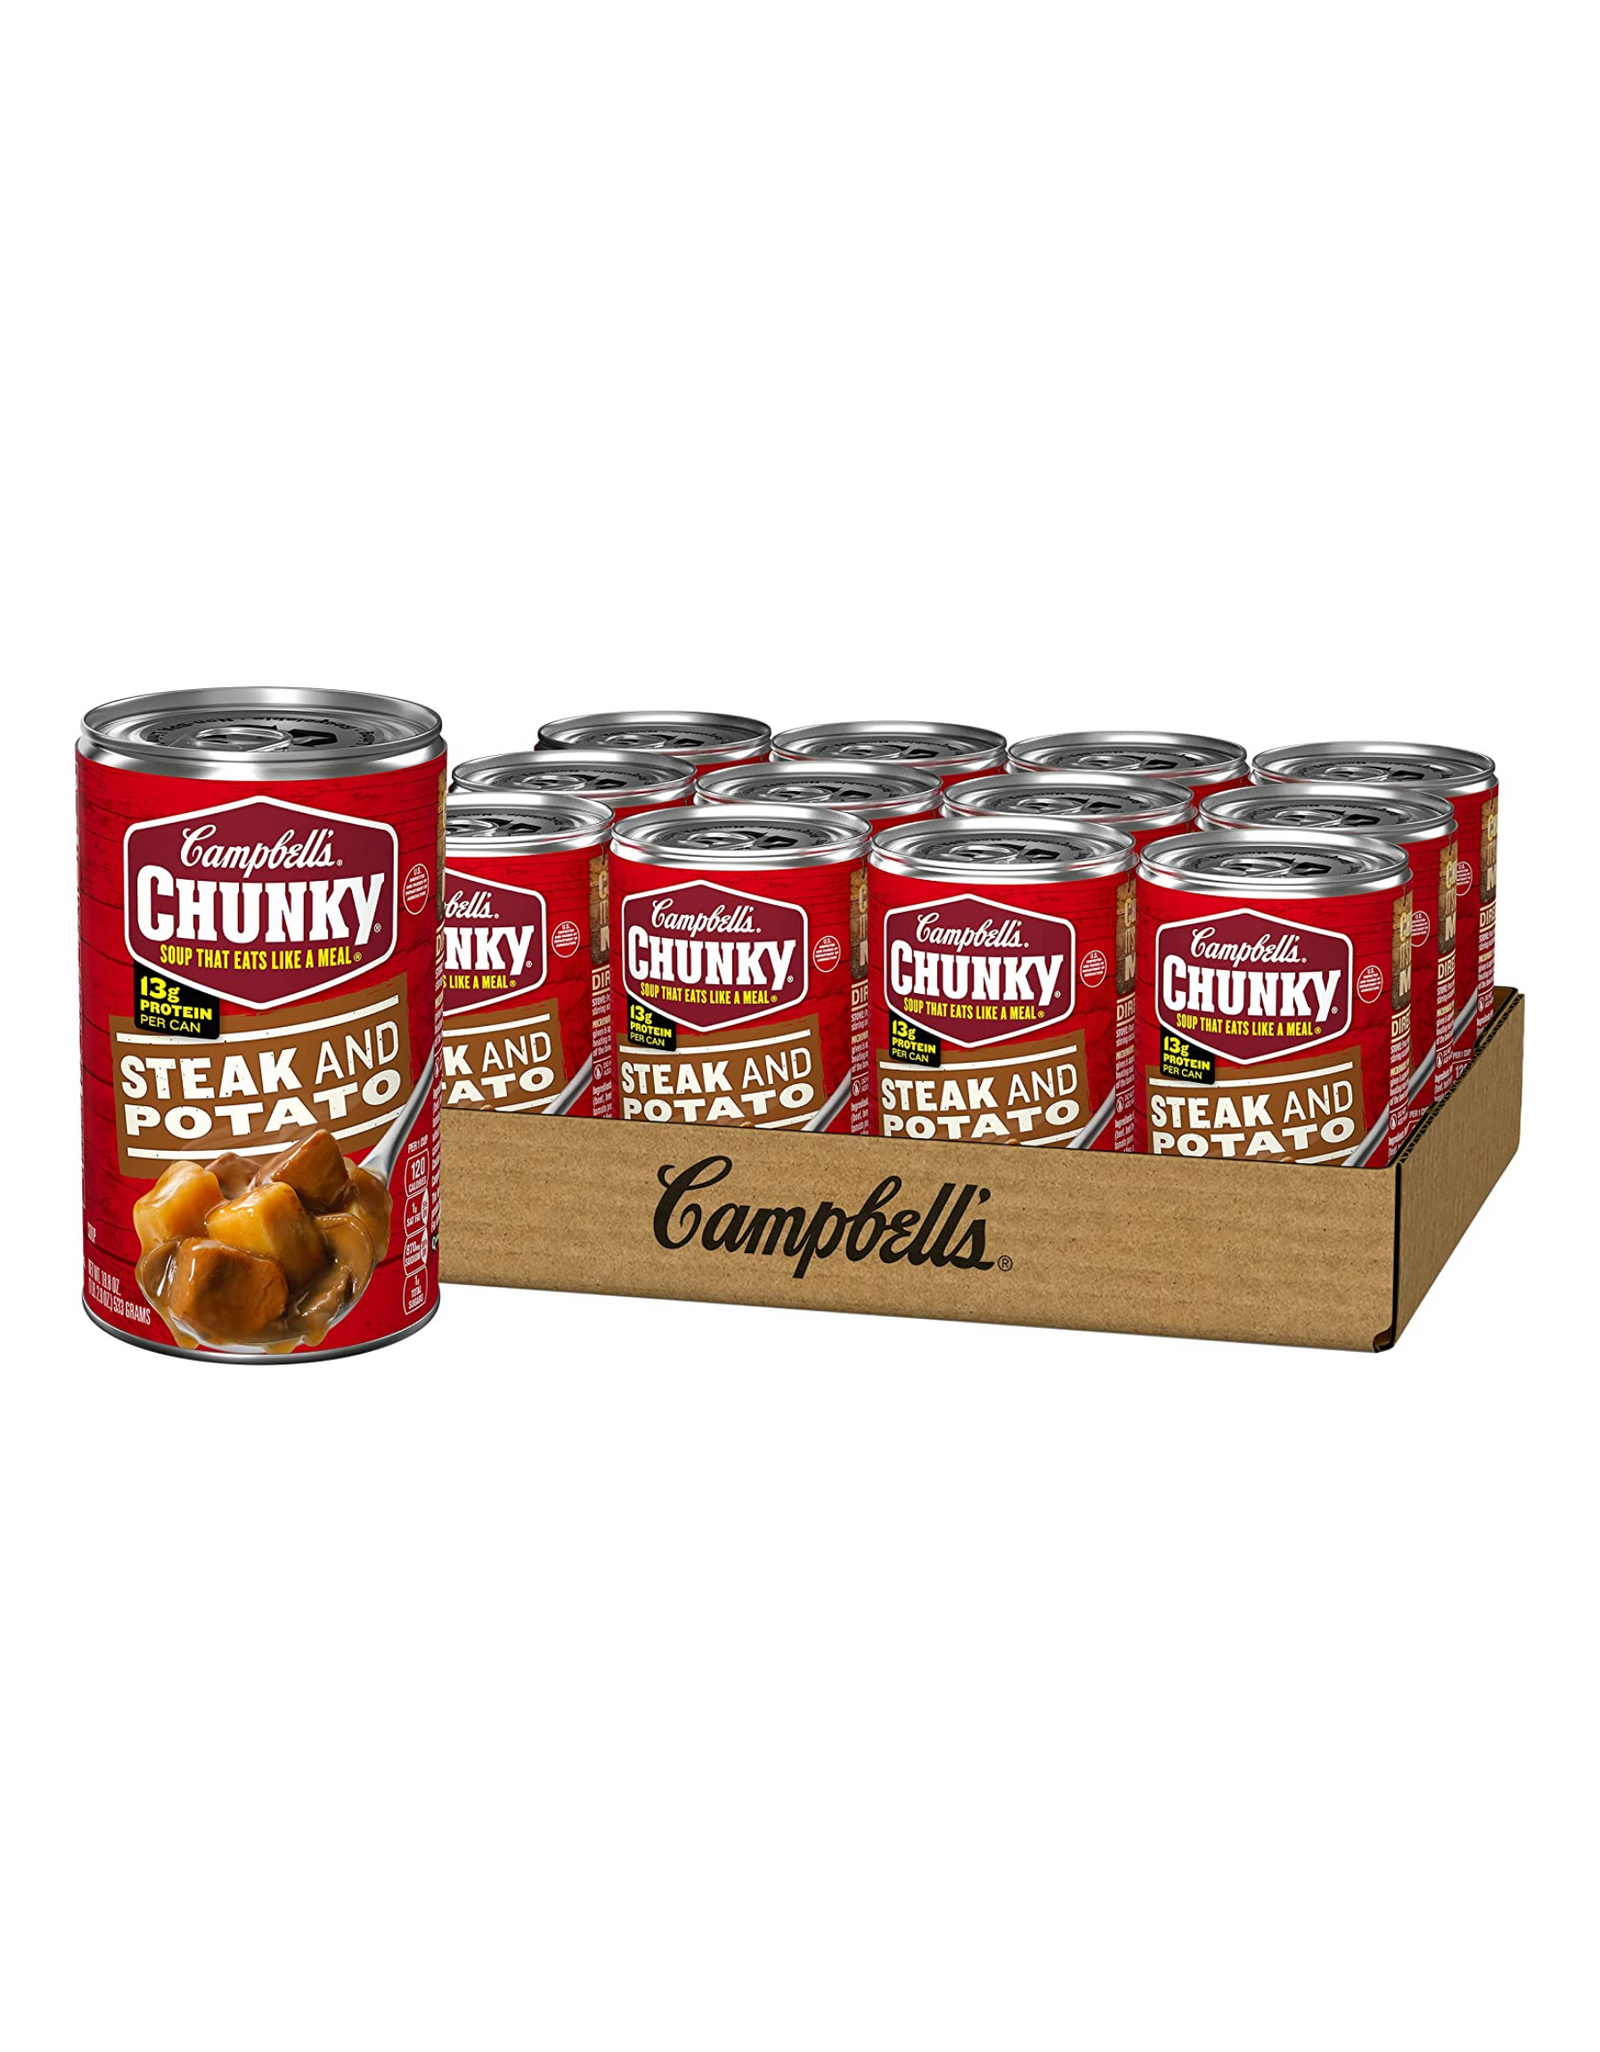 Campbell's Chunky Steak & Potato Soup, 18.8 oz, 12 Cans